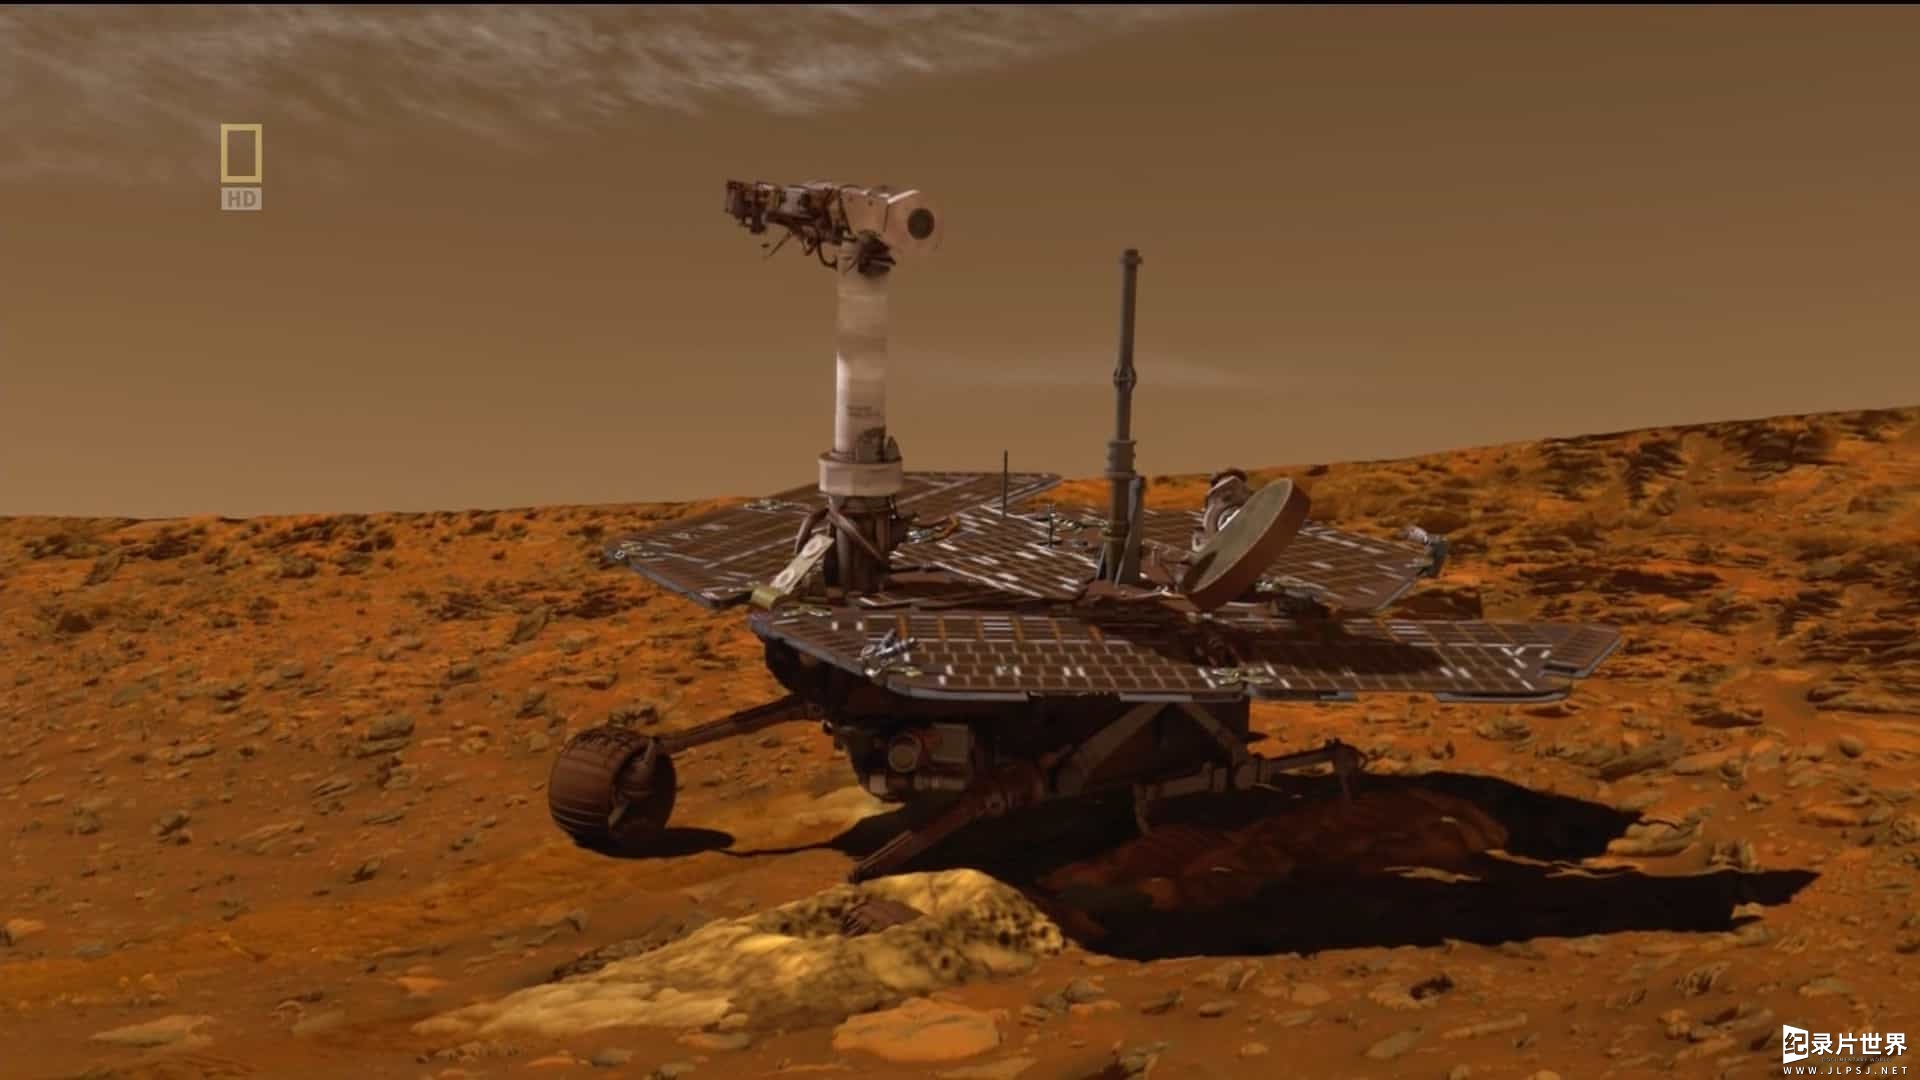 国家地理《火星漫游者之死 Death of a Mars Rover》全1集